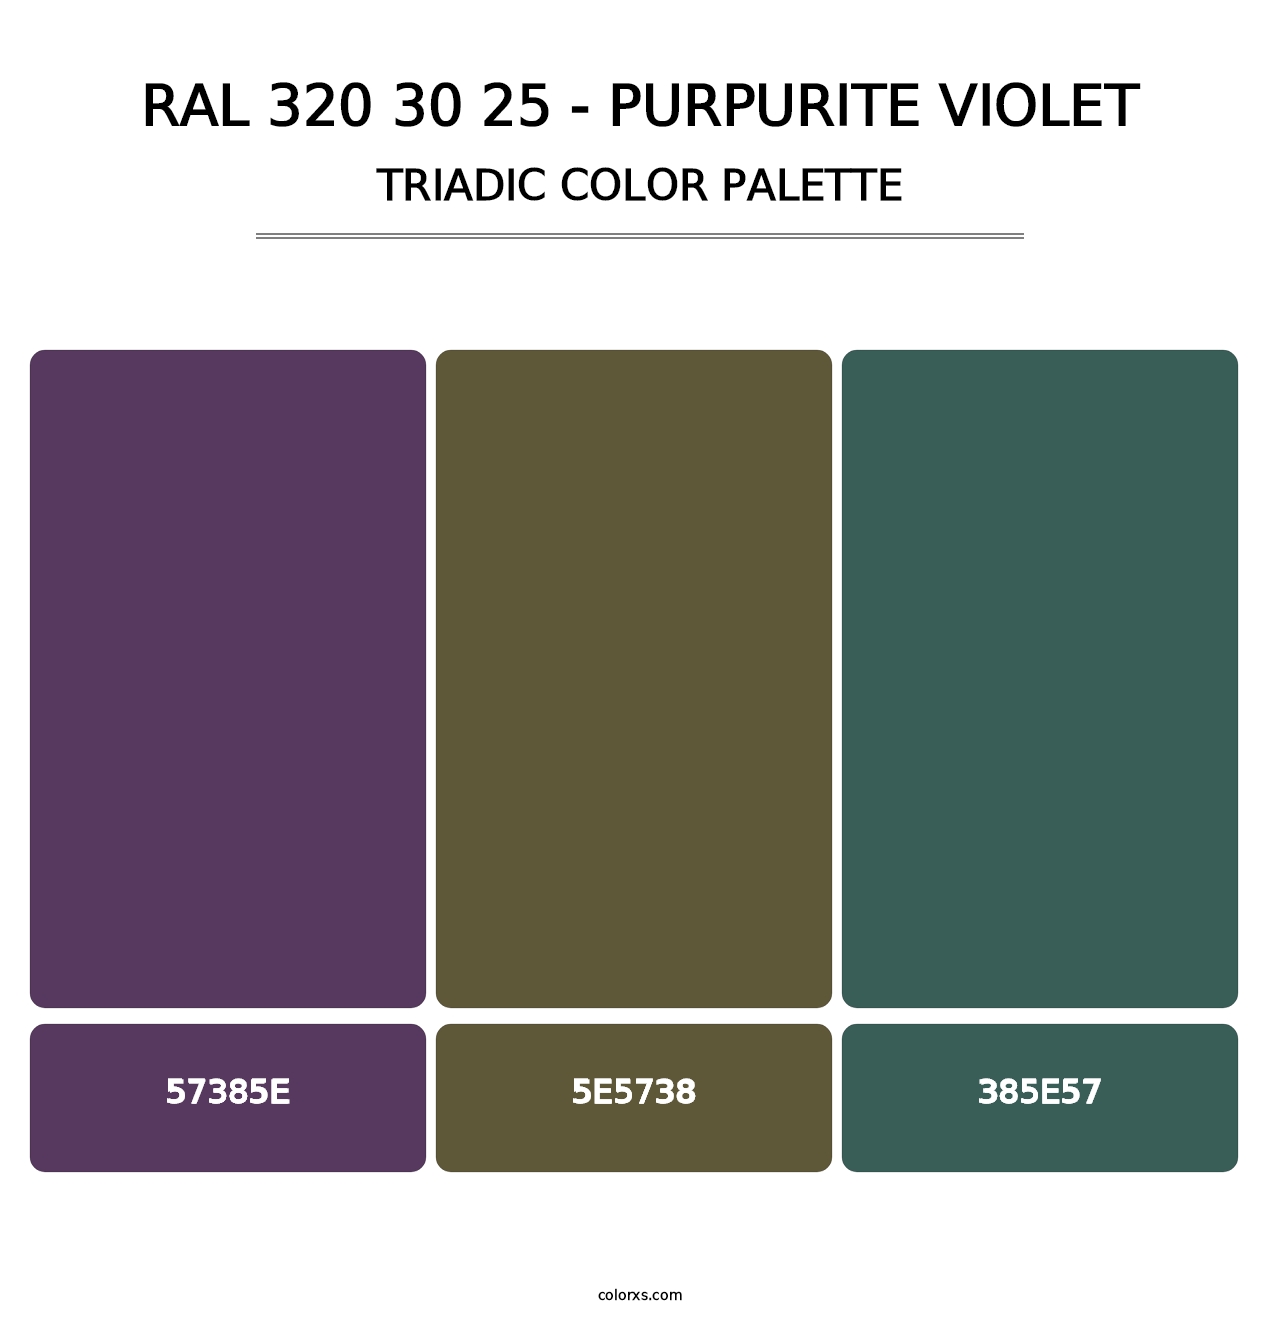 RAL 320 30 25 - Purpurite Violet - Triadic Color Palette